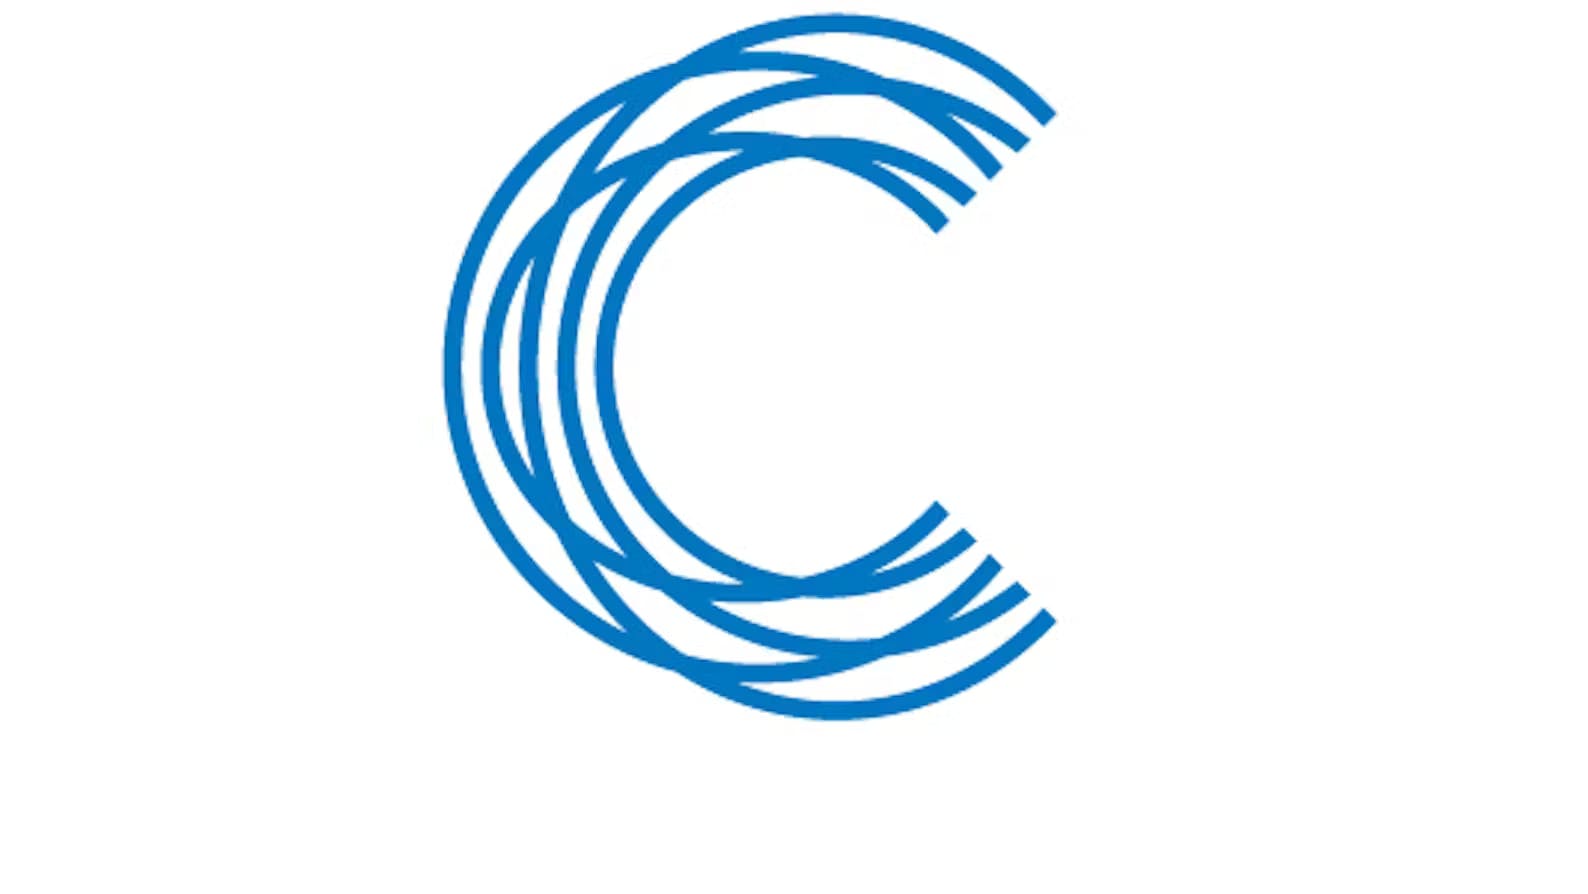 Calgary Chamber of Commerce logo on white background